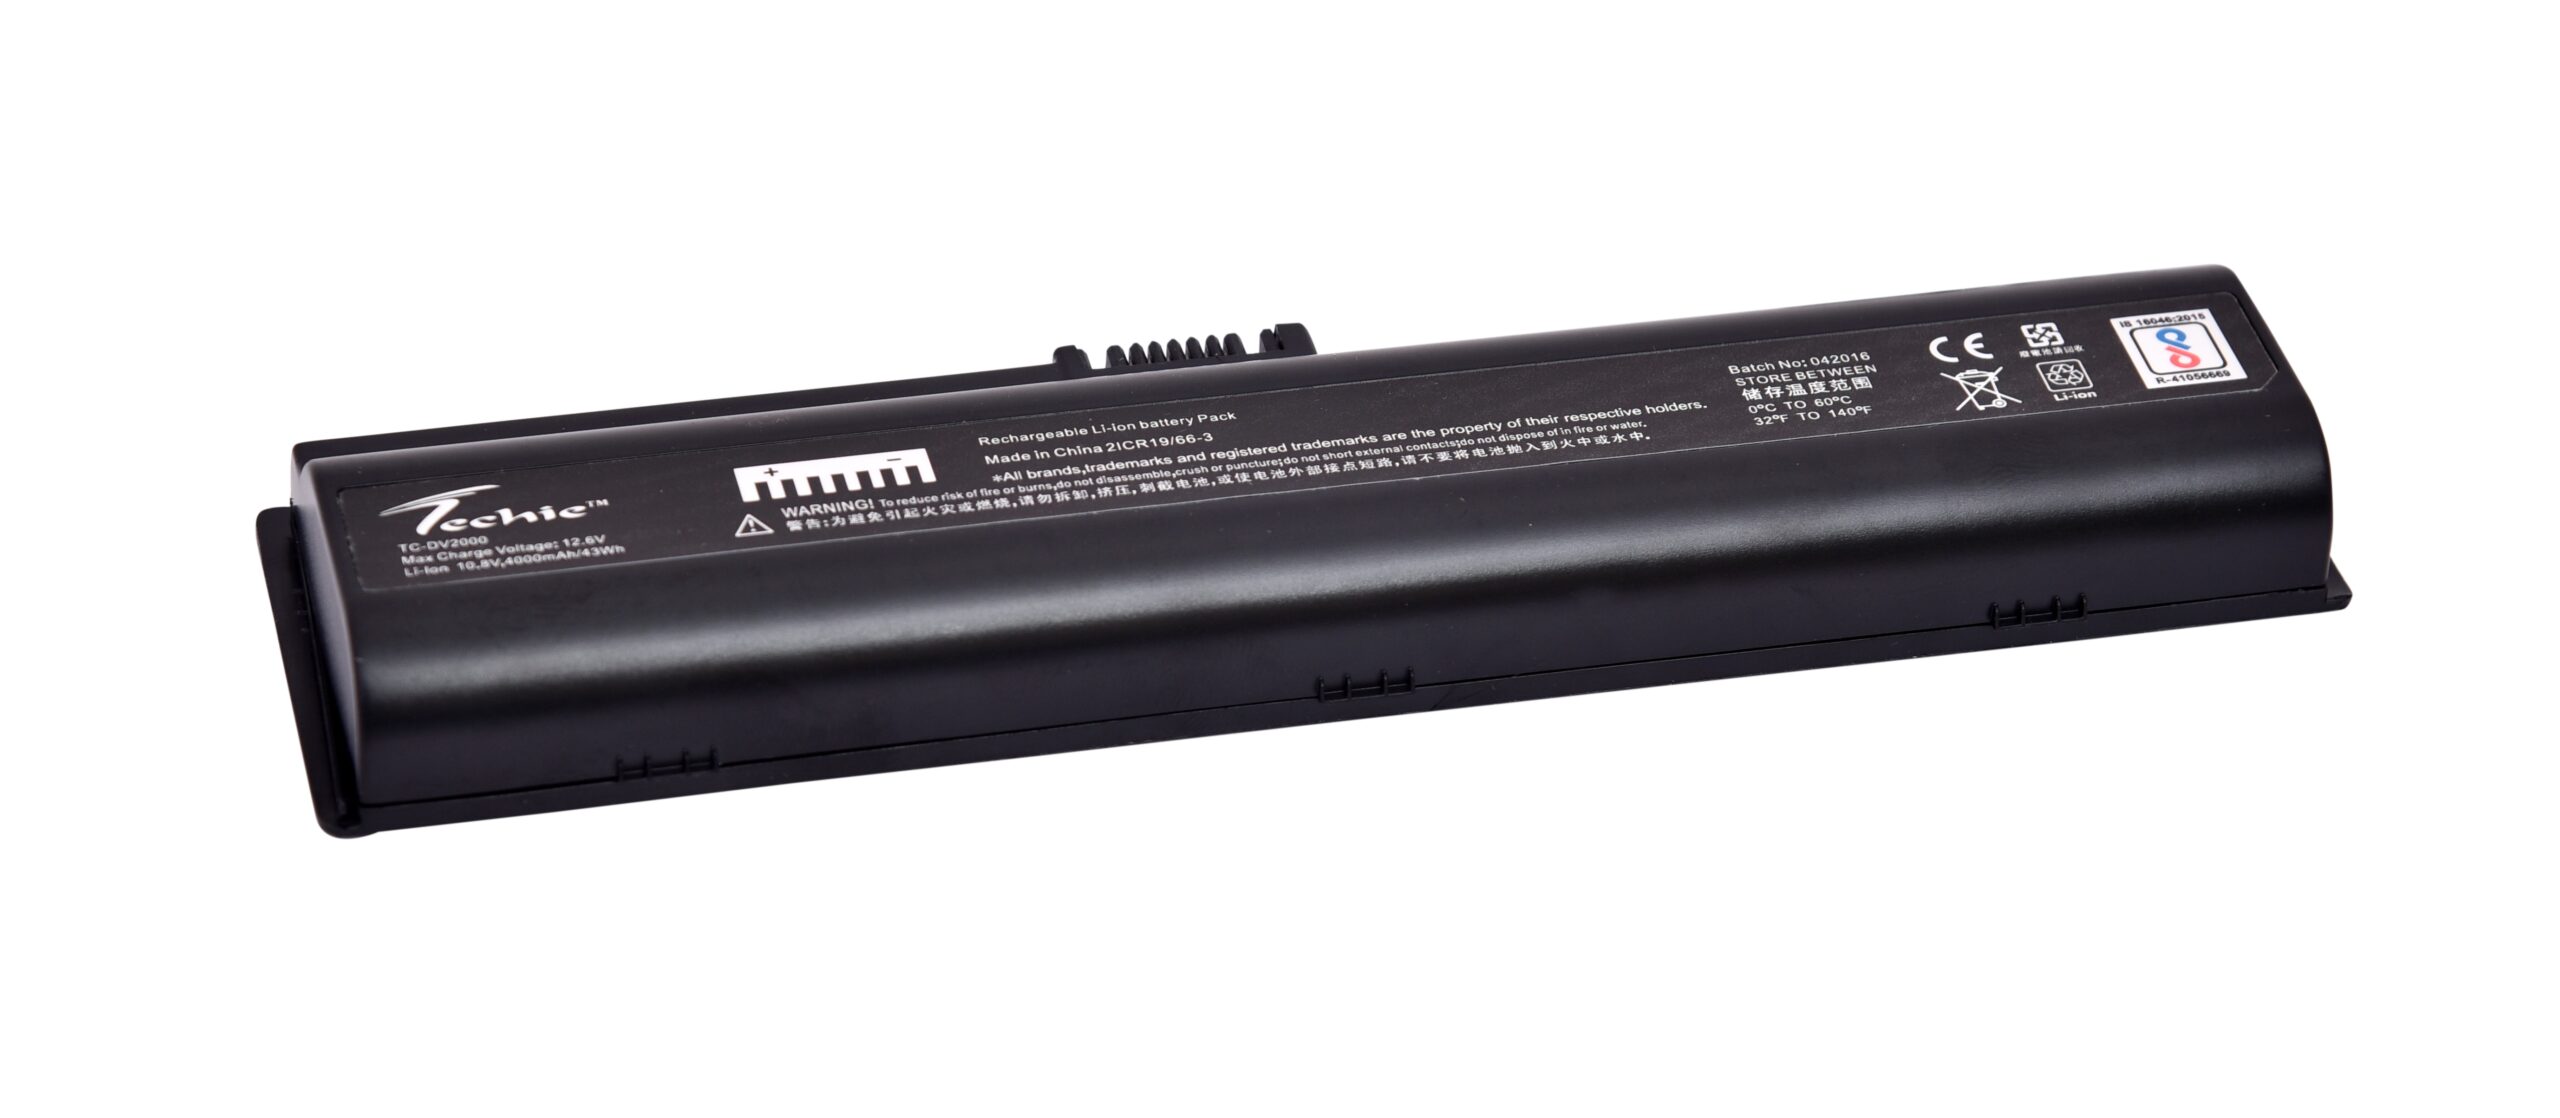 Techie Compatible Battery for HP DV2000-12 C - Pavilion DV2000, DV2300, DV2400 series Laptop (8000mAh, 6-Cell)